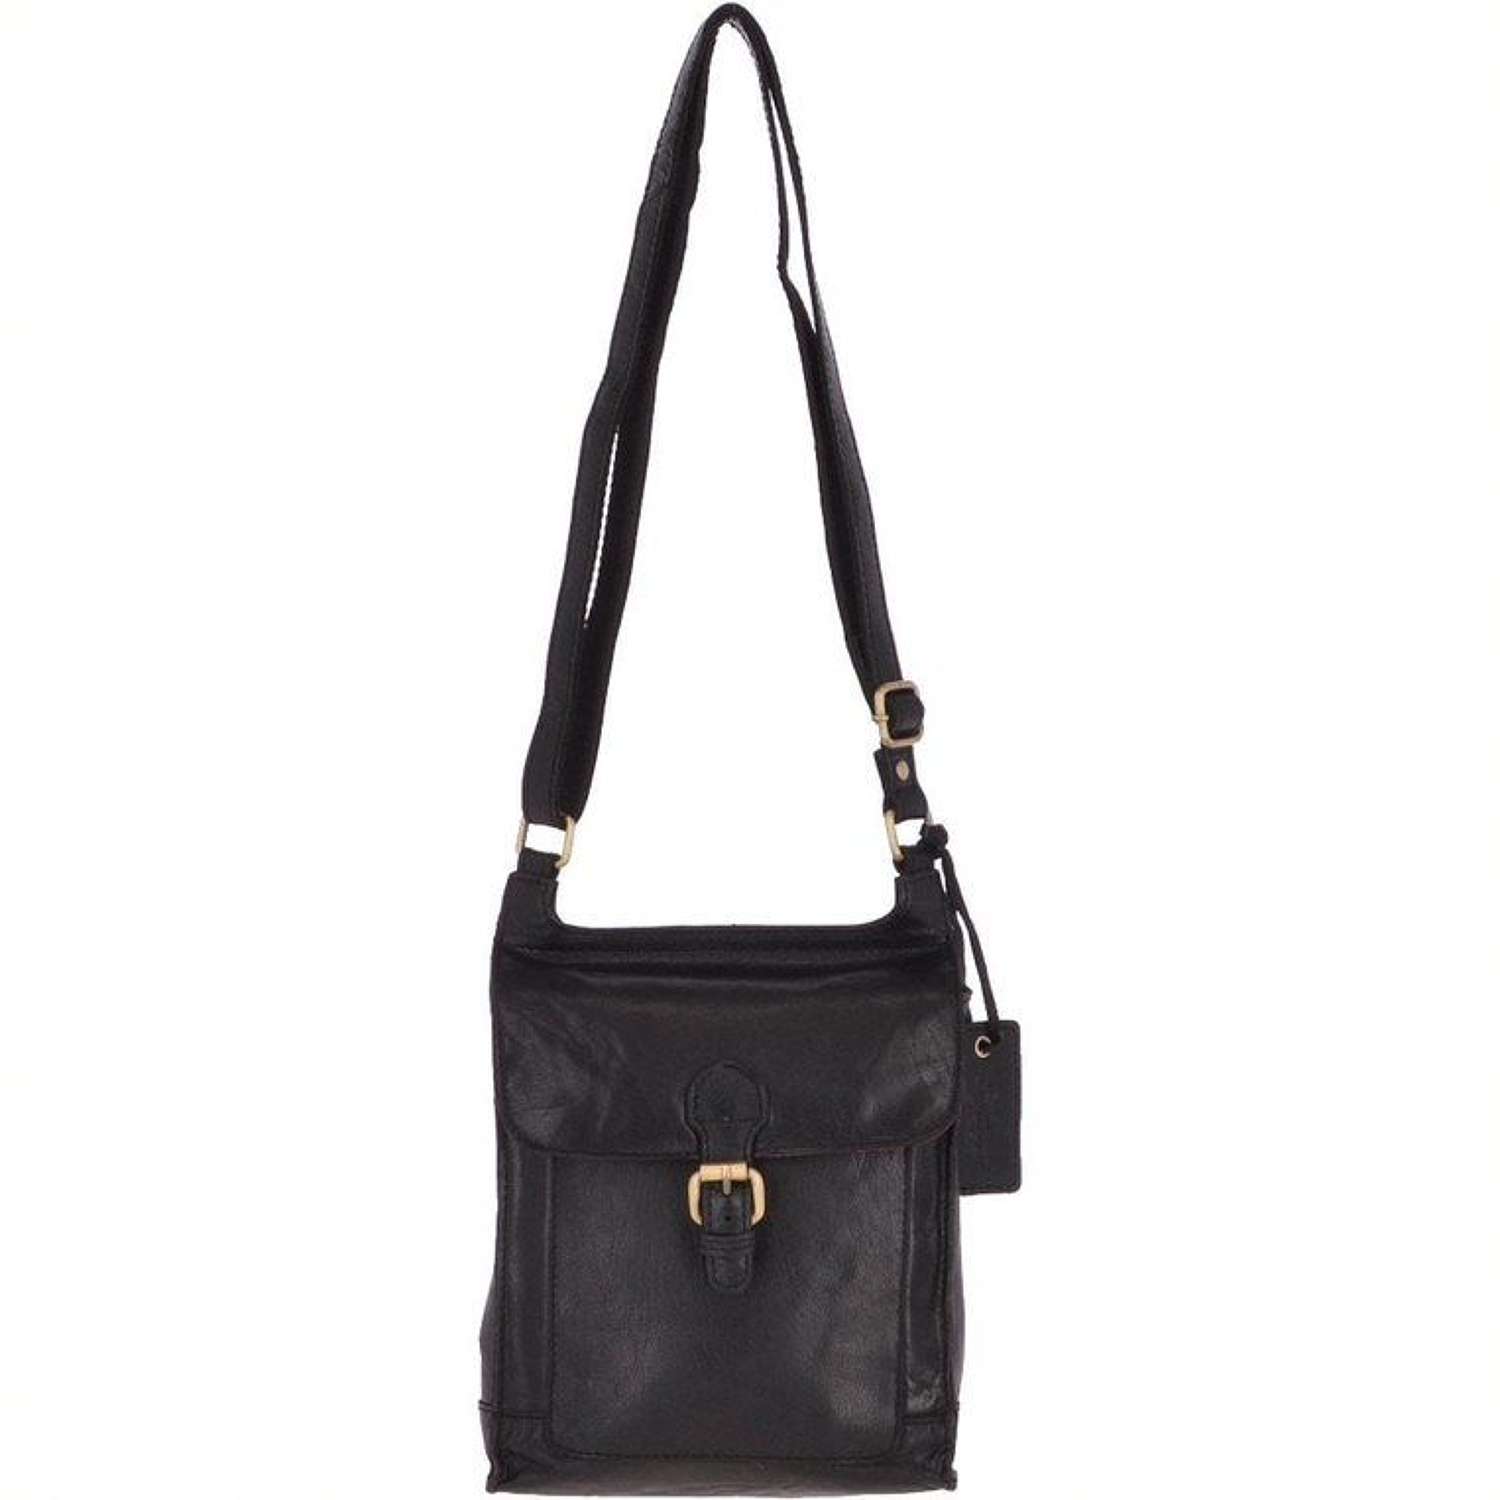 Leather Handbag Black - G-24